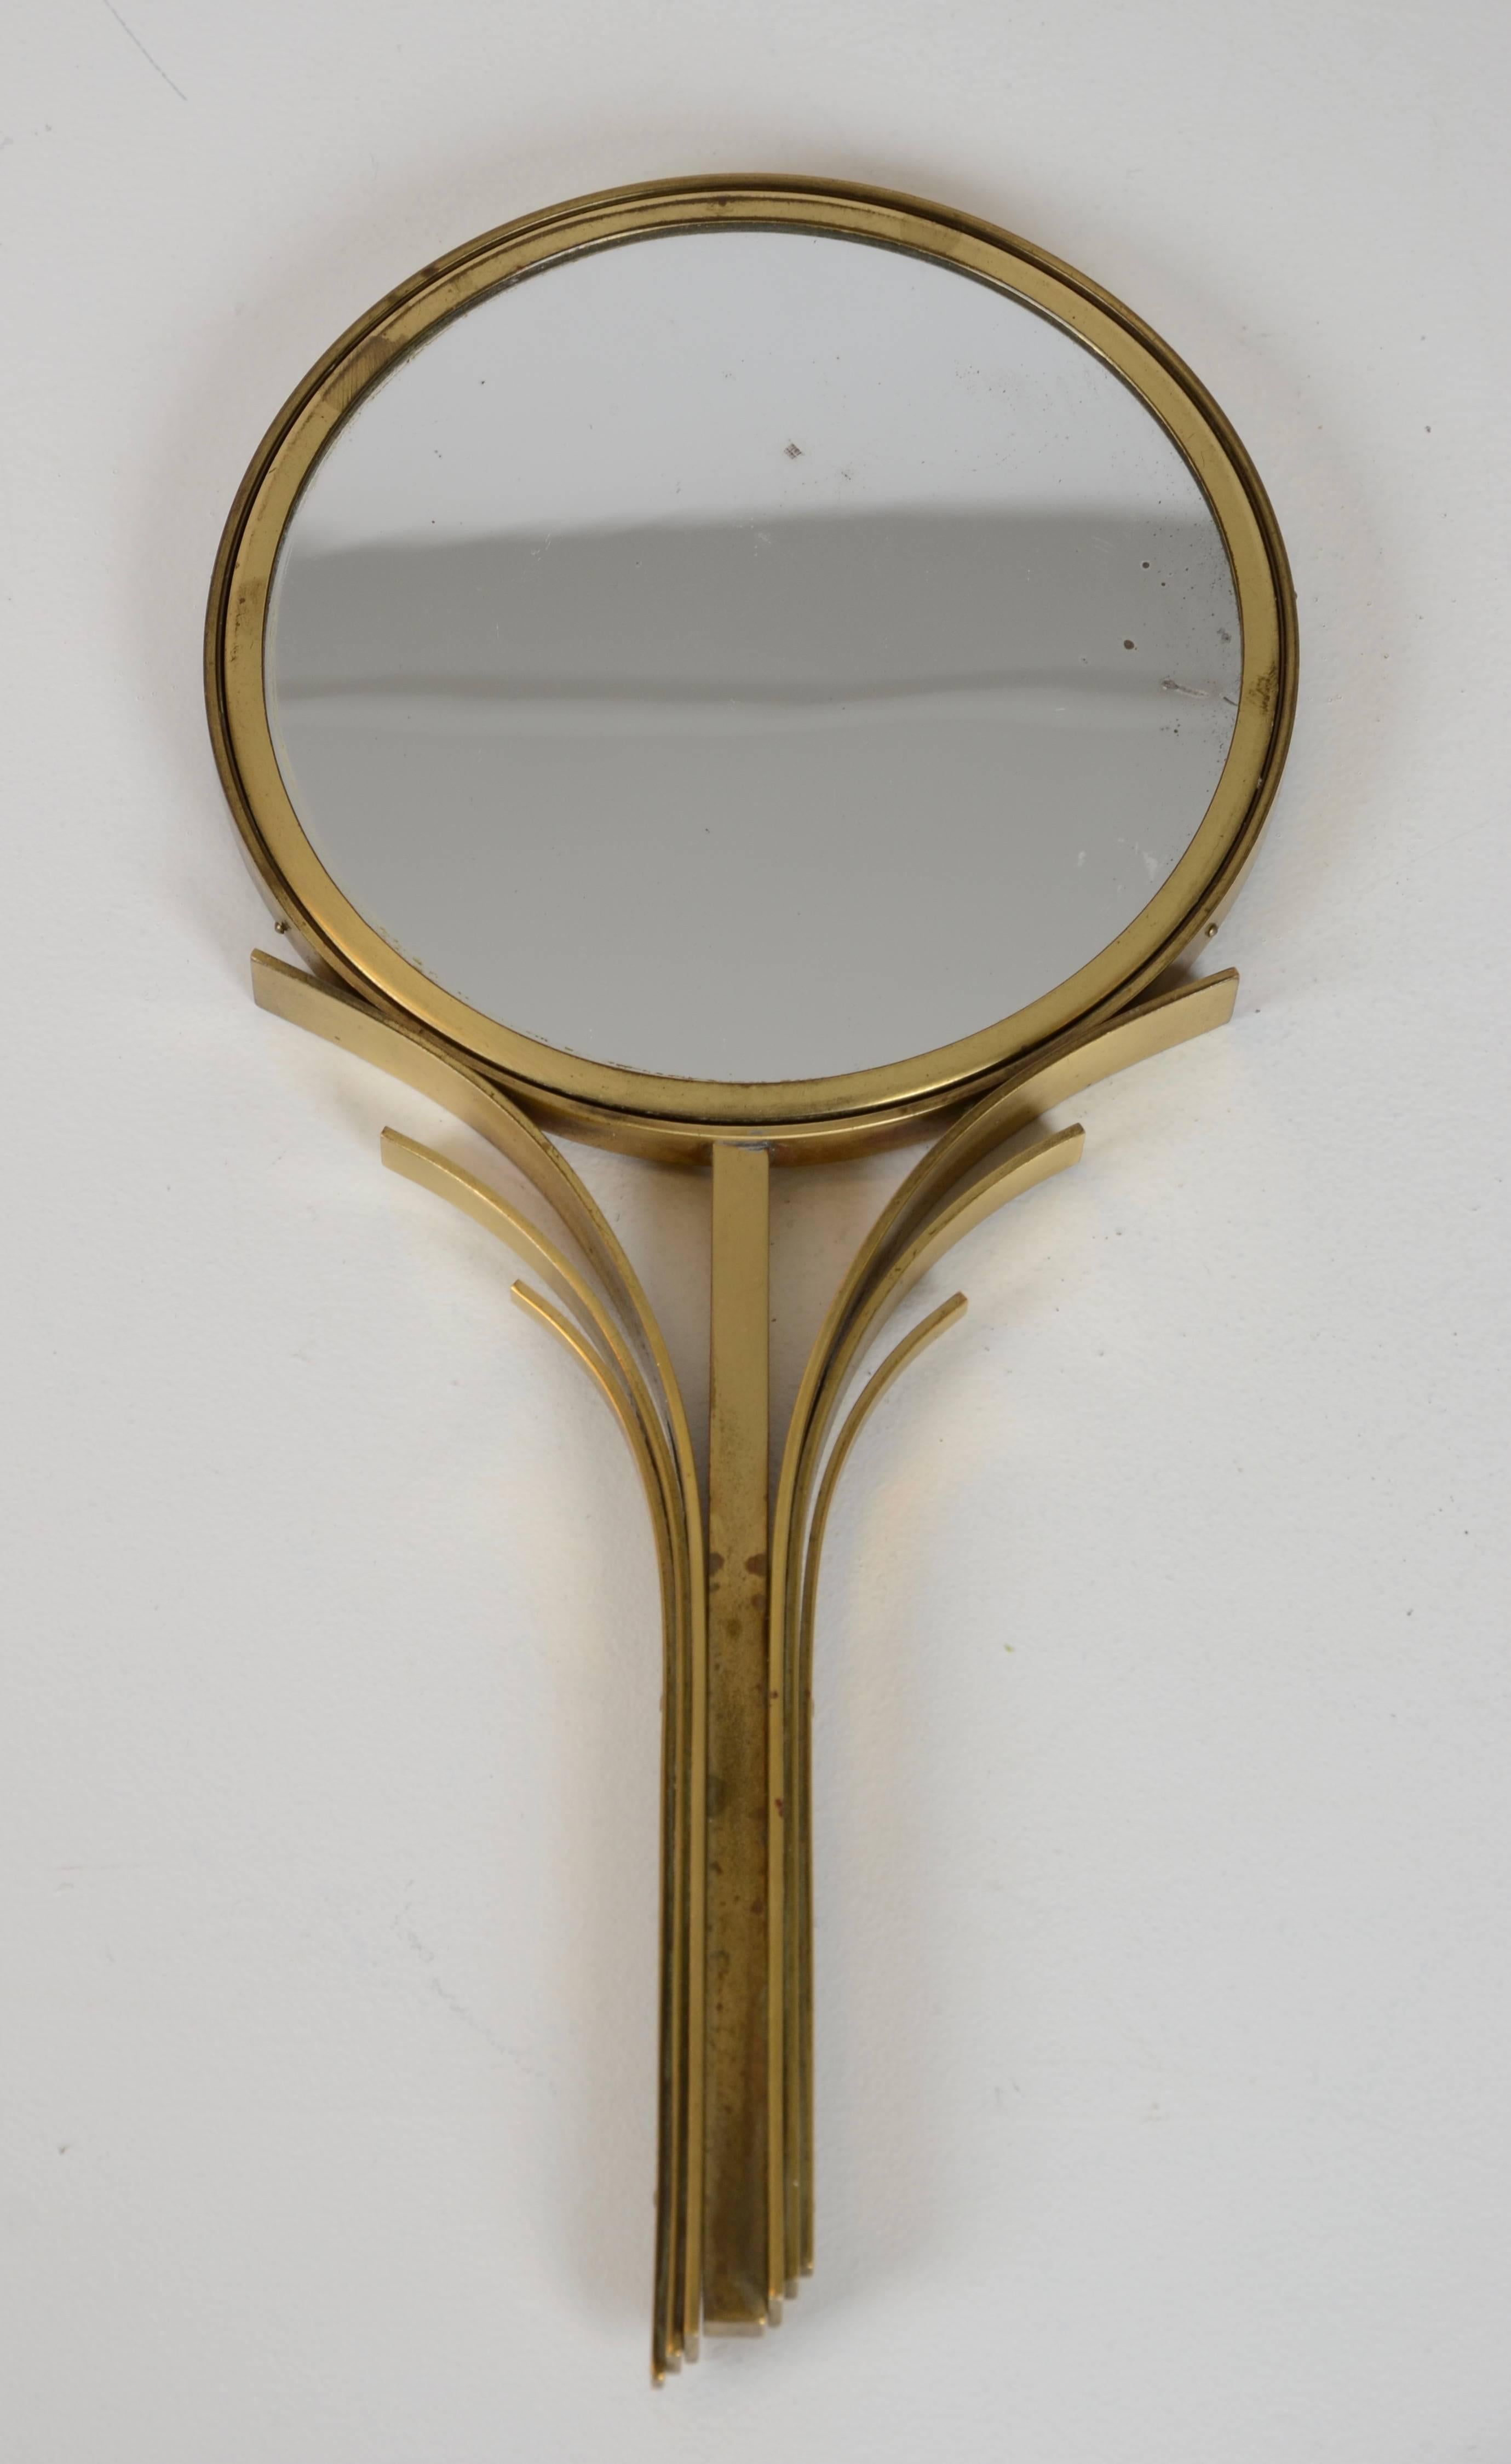 Hand mirror in brass, designed by Ivar Ålenius-Björk for Ystad Metall, Sweden, 1930s.